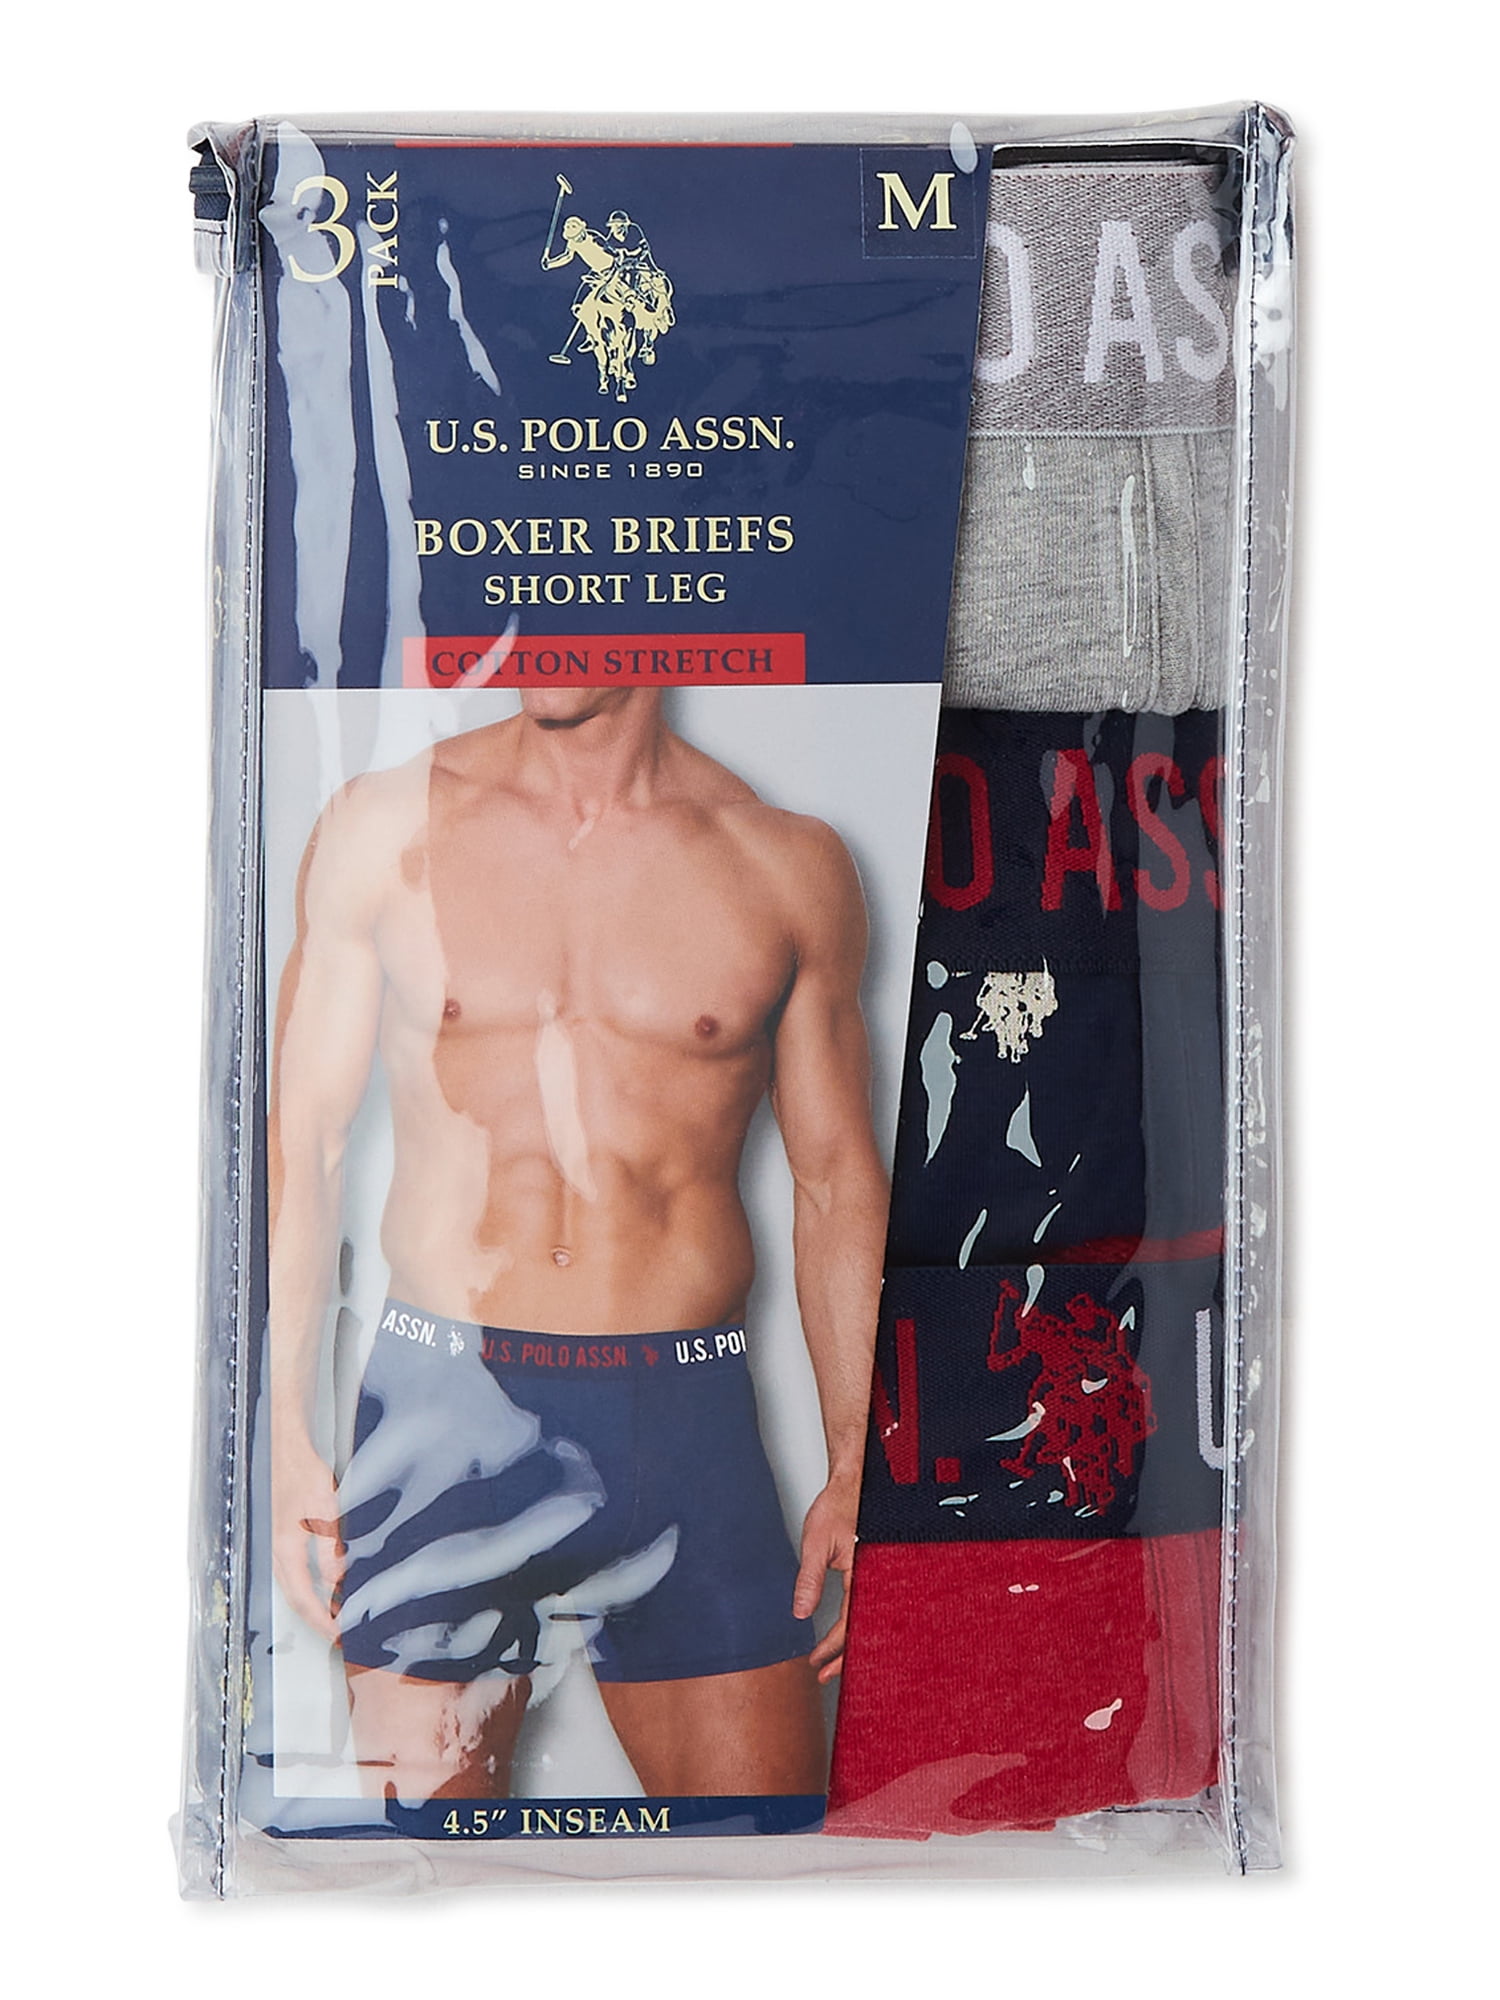 U.S. Polo Assn. Men's Cotton Stretch Mid Leg Boxer Briefs Underwear, 4.5  Inch, 3 Pack